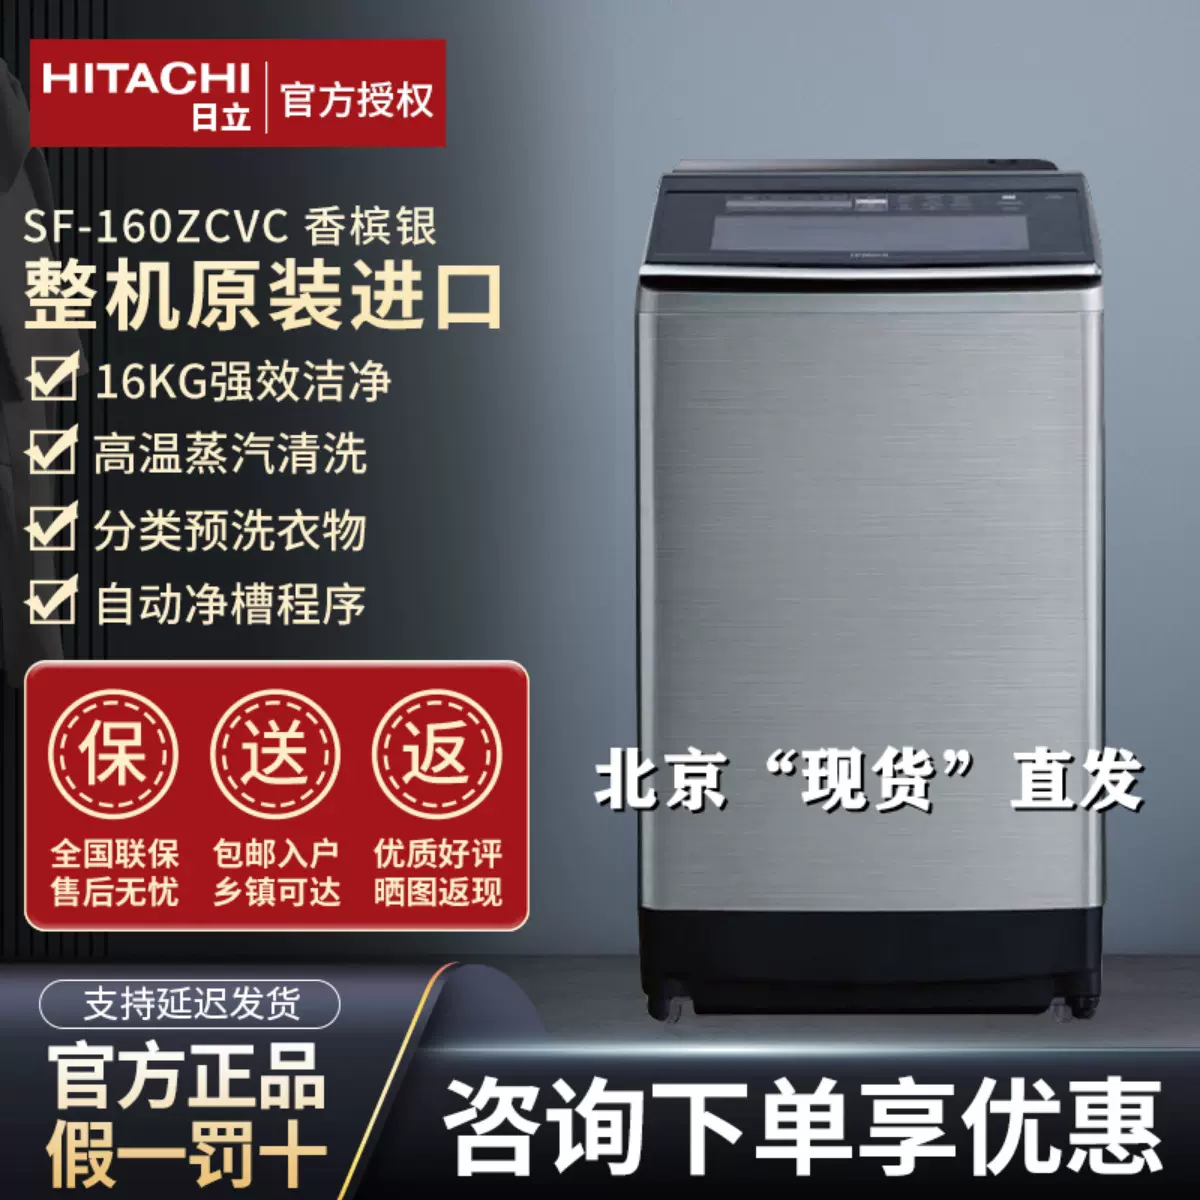 Hitachi/日立SFZCVC原裝進口全自動波輪熱水洗變頻kg洗衣機 Taobao